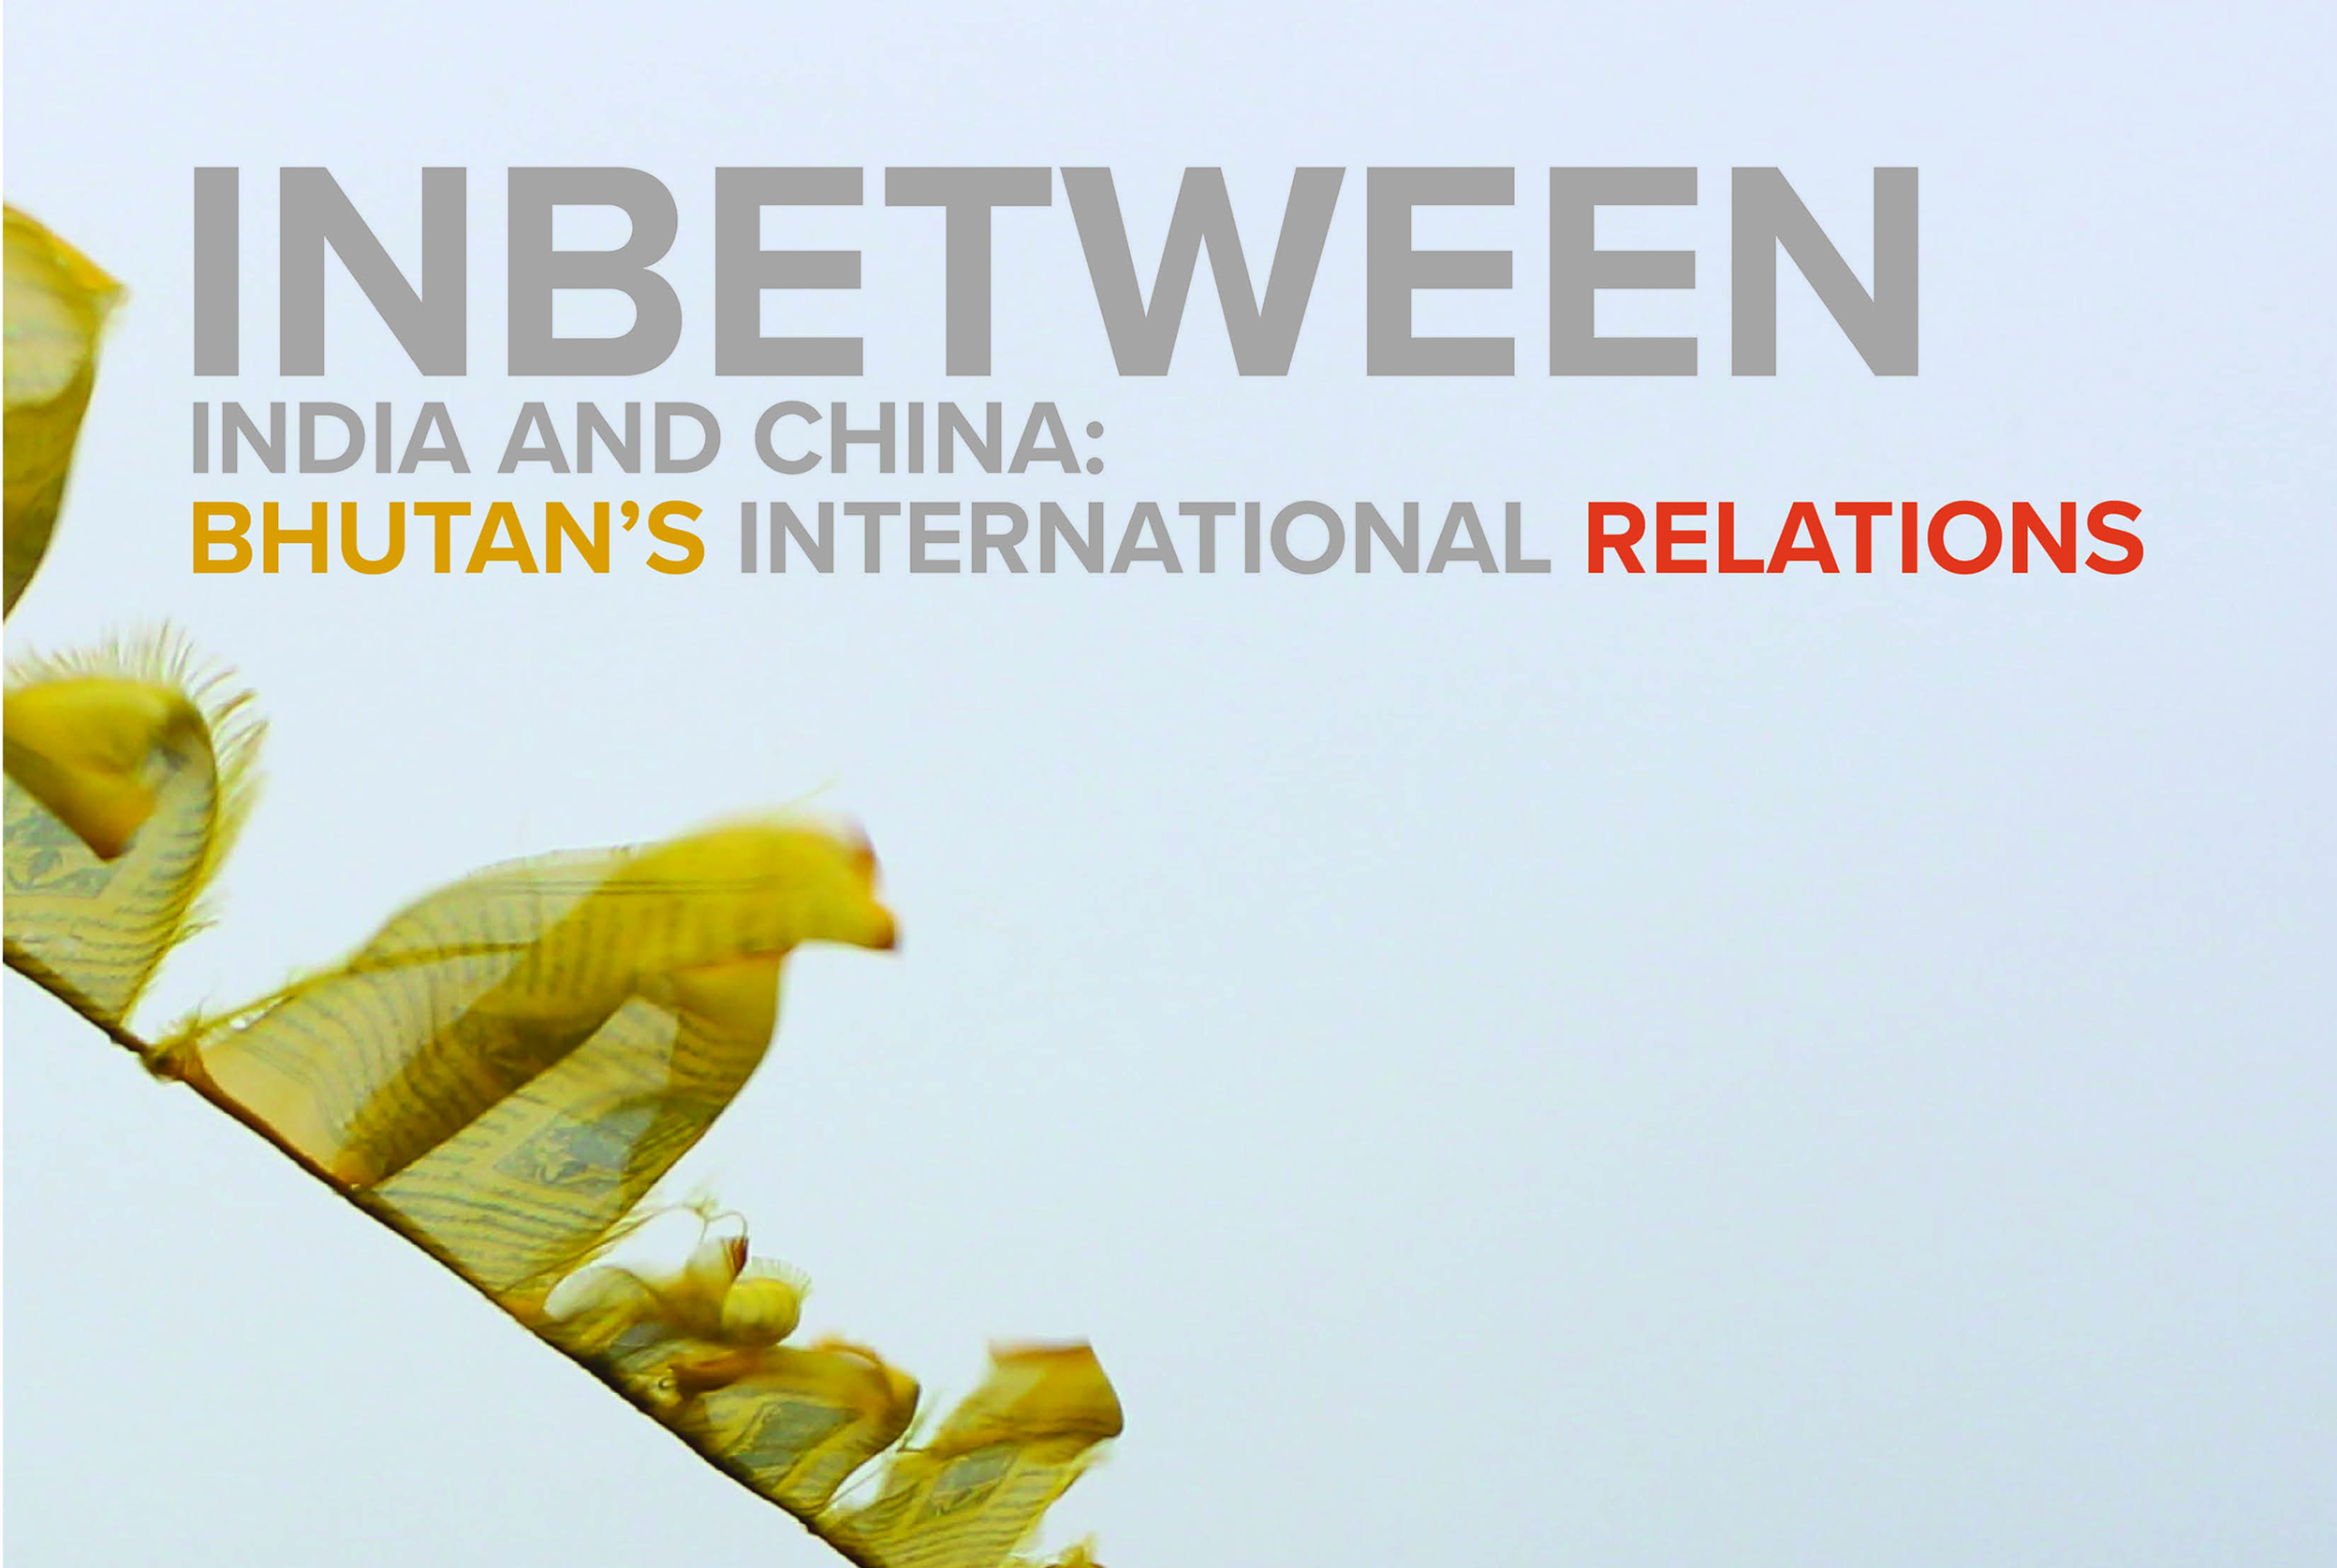 Nitasha Kaul – ‘Inbetween’ India and China: Bhutan’s International Relations